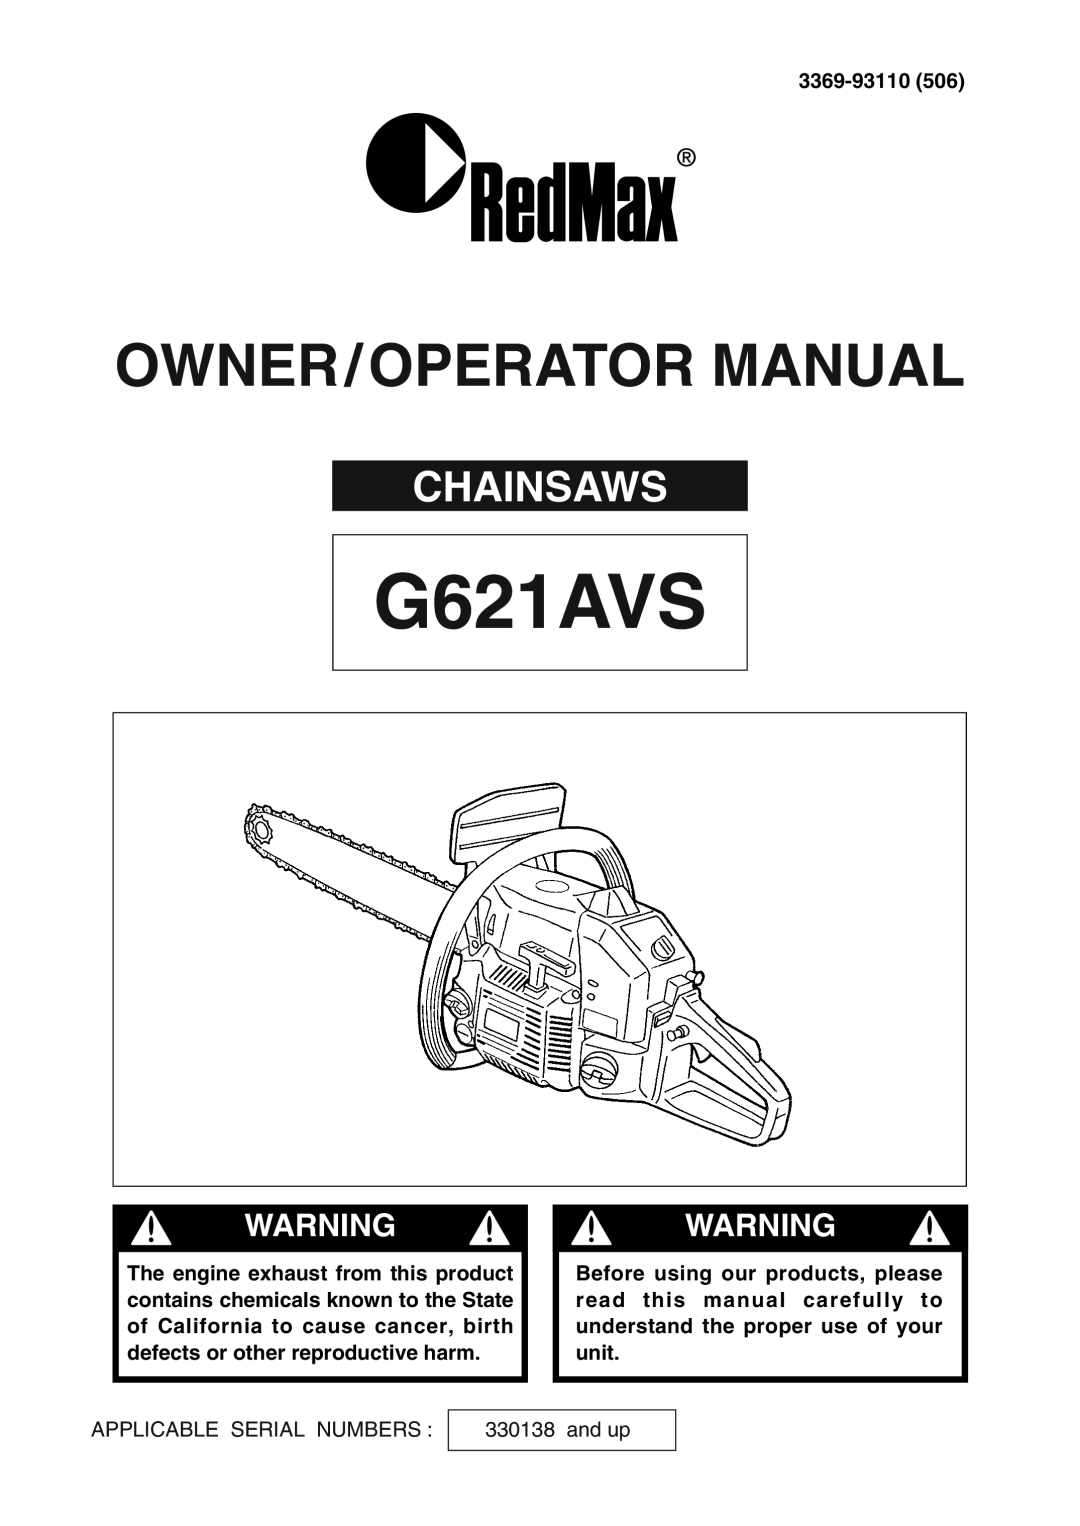 RedMax G621AVS manual Chainsaws, Owner/Operator Manual 